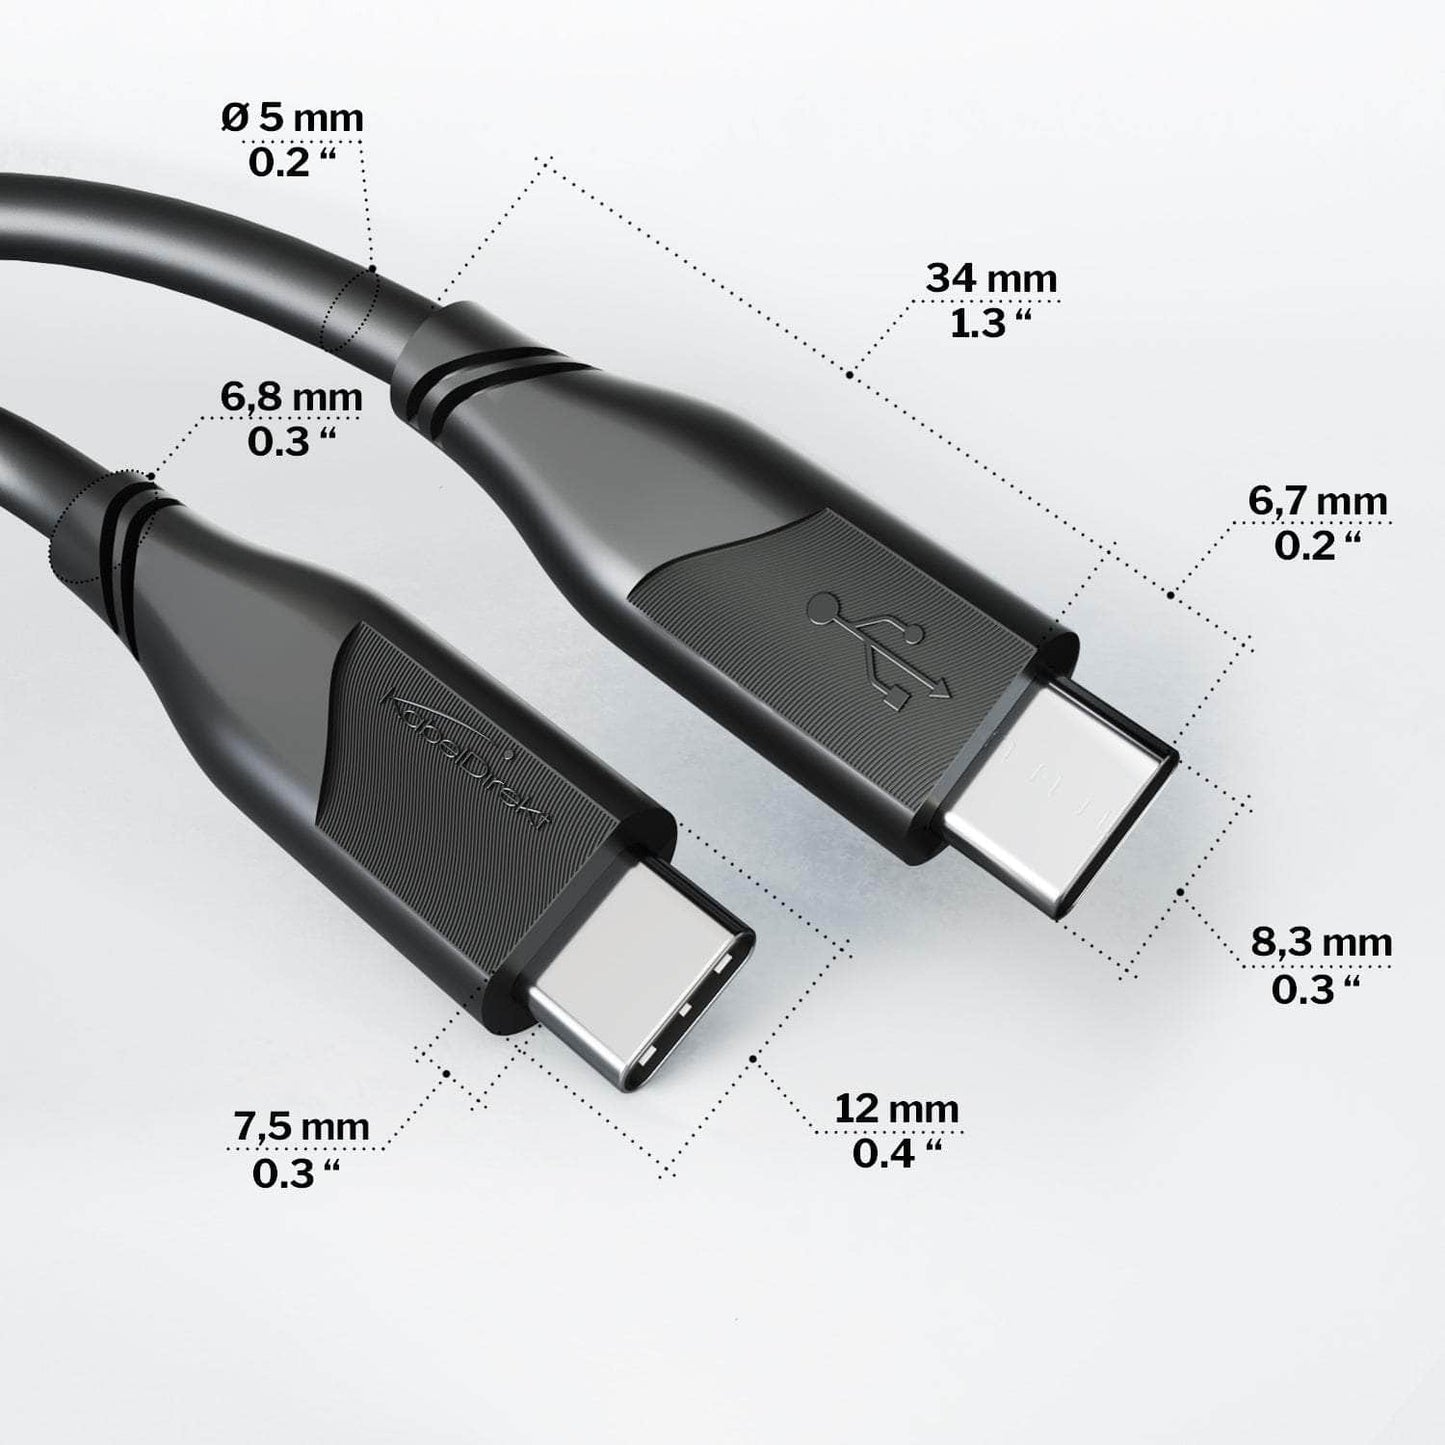 USB-C-Kabel - USB 2.0, Power Delivery 3, schwarz